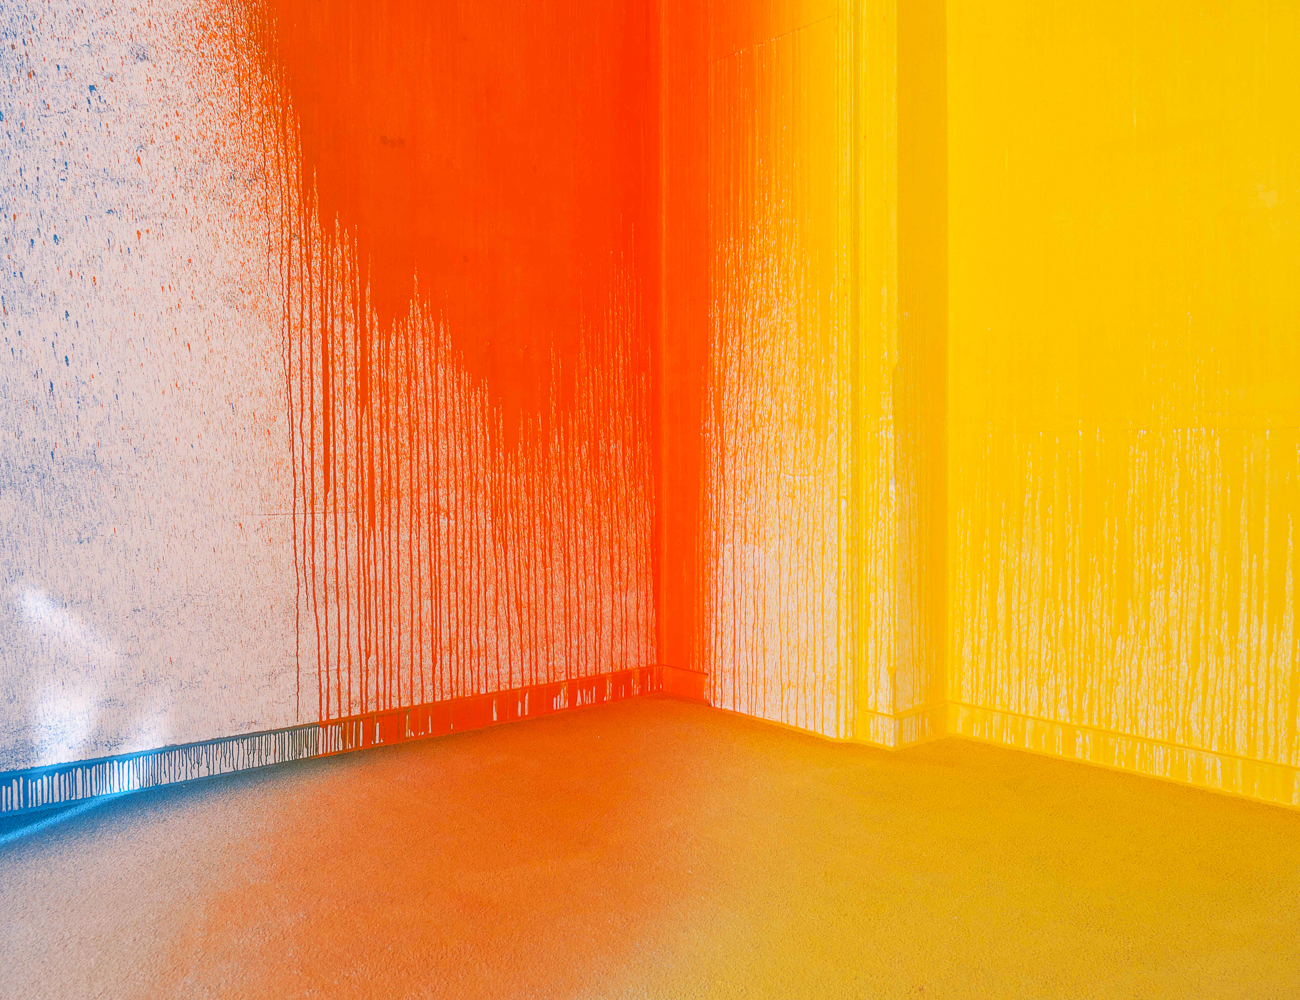 02 © Rutger de Vries, Color Disperser, 2019, Photo by Jan Tengbergen